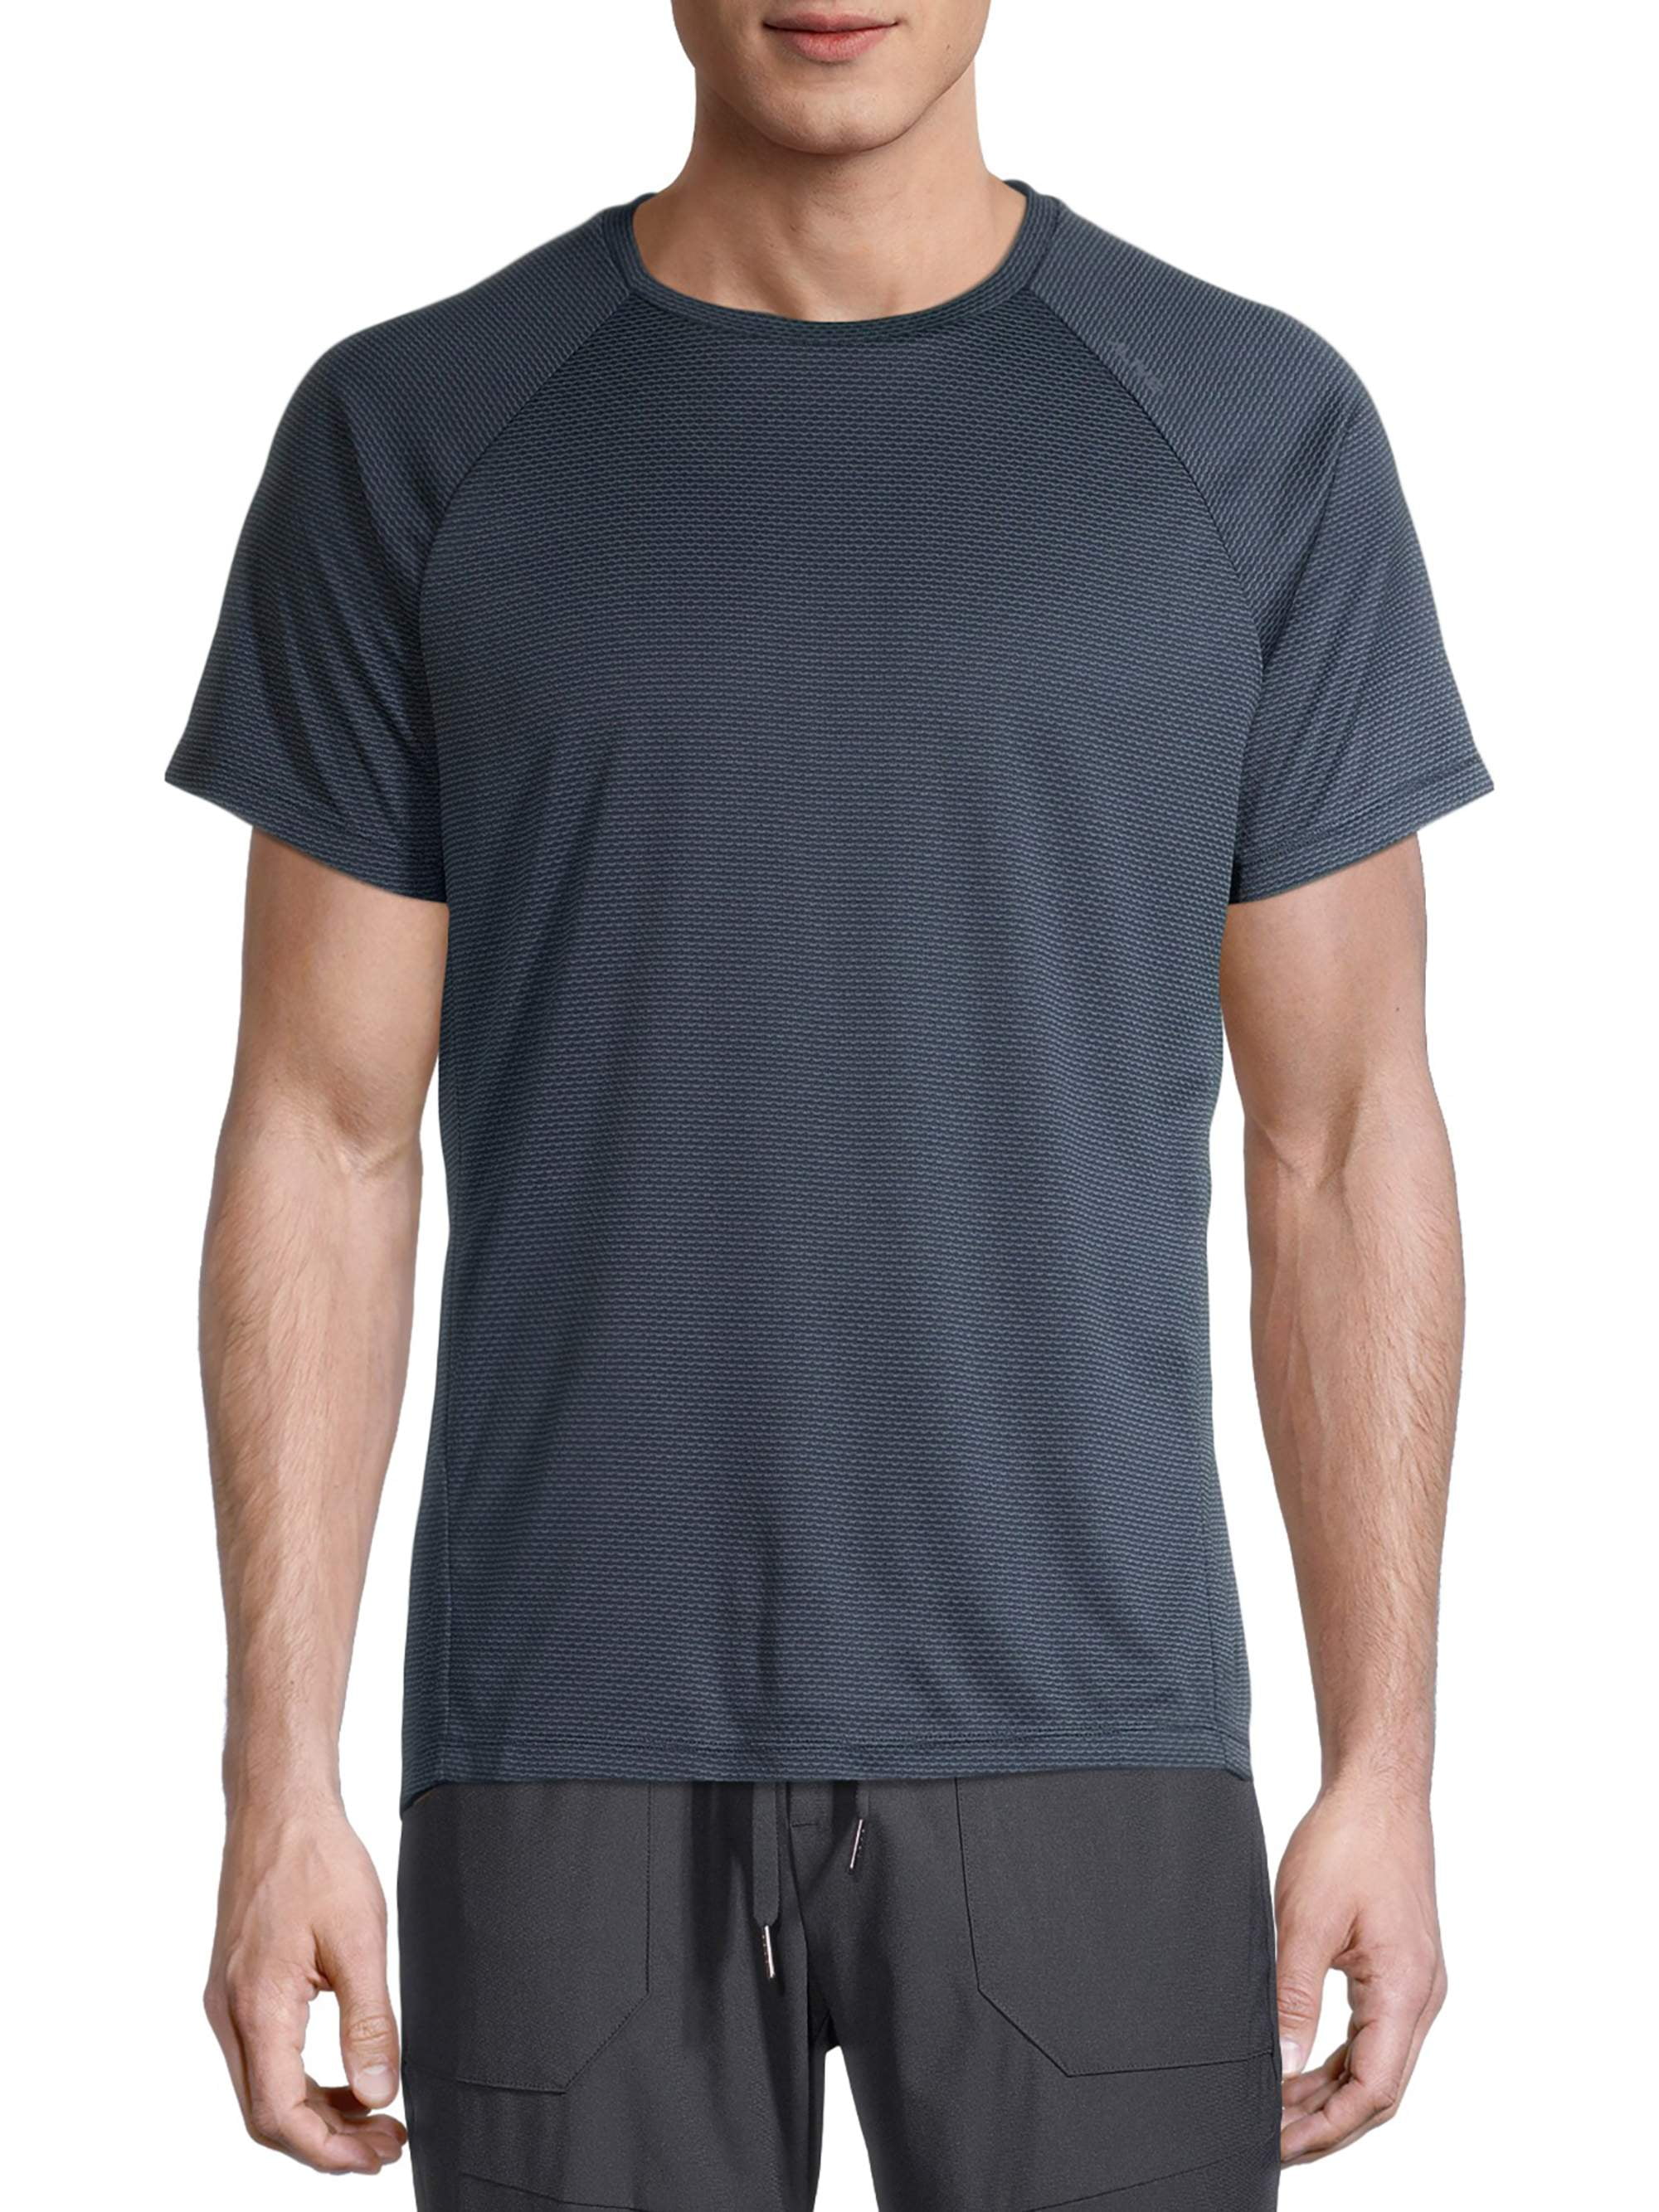 AL1VE Men's Bubble Performance T-Shirt - Walmart.com